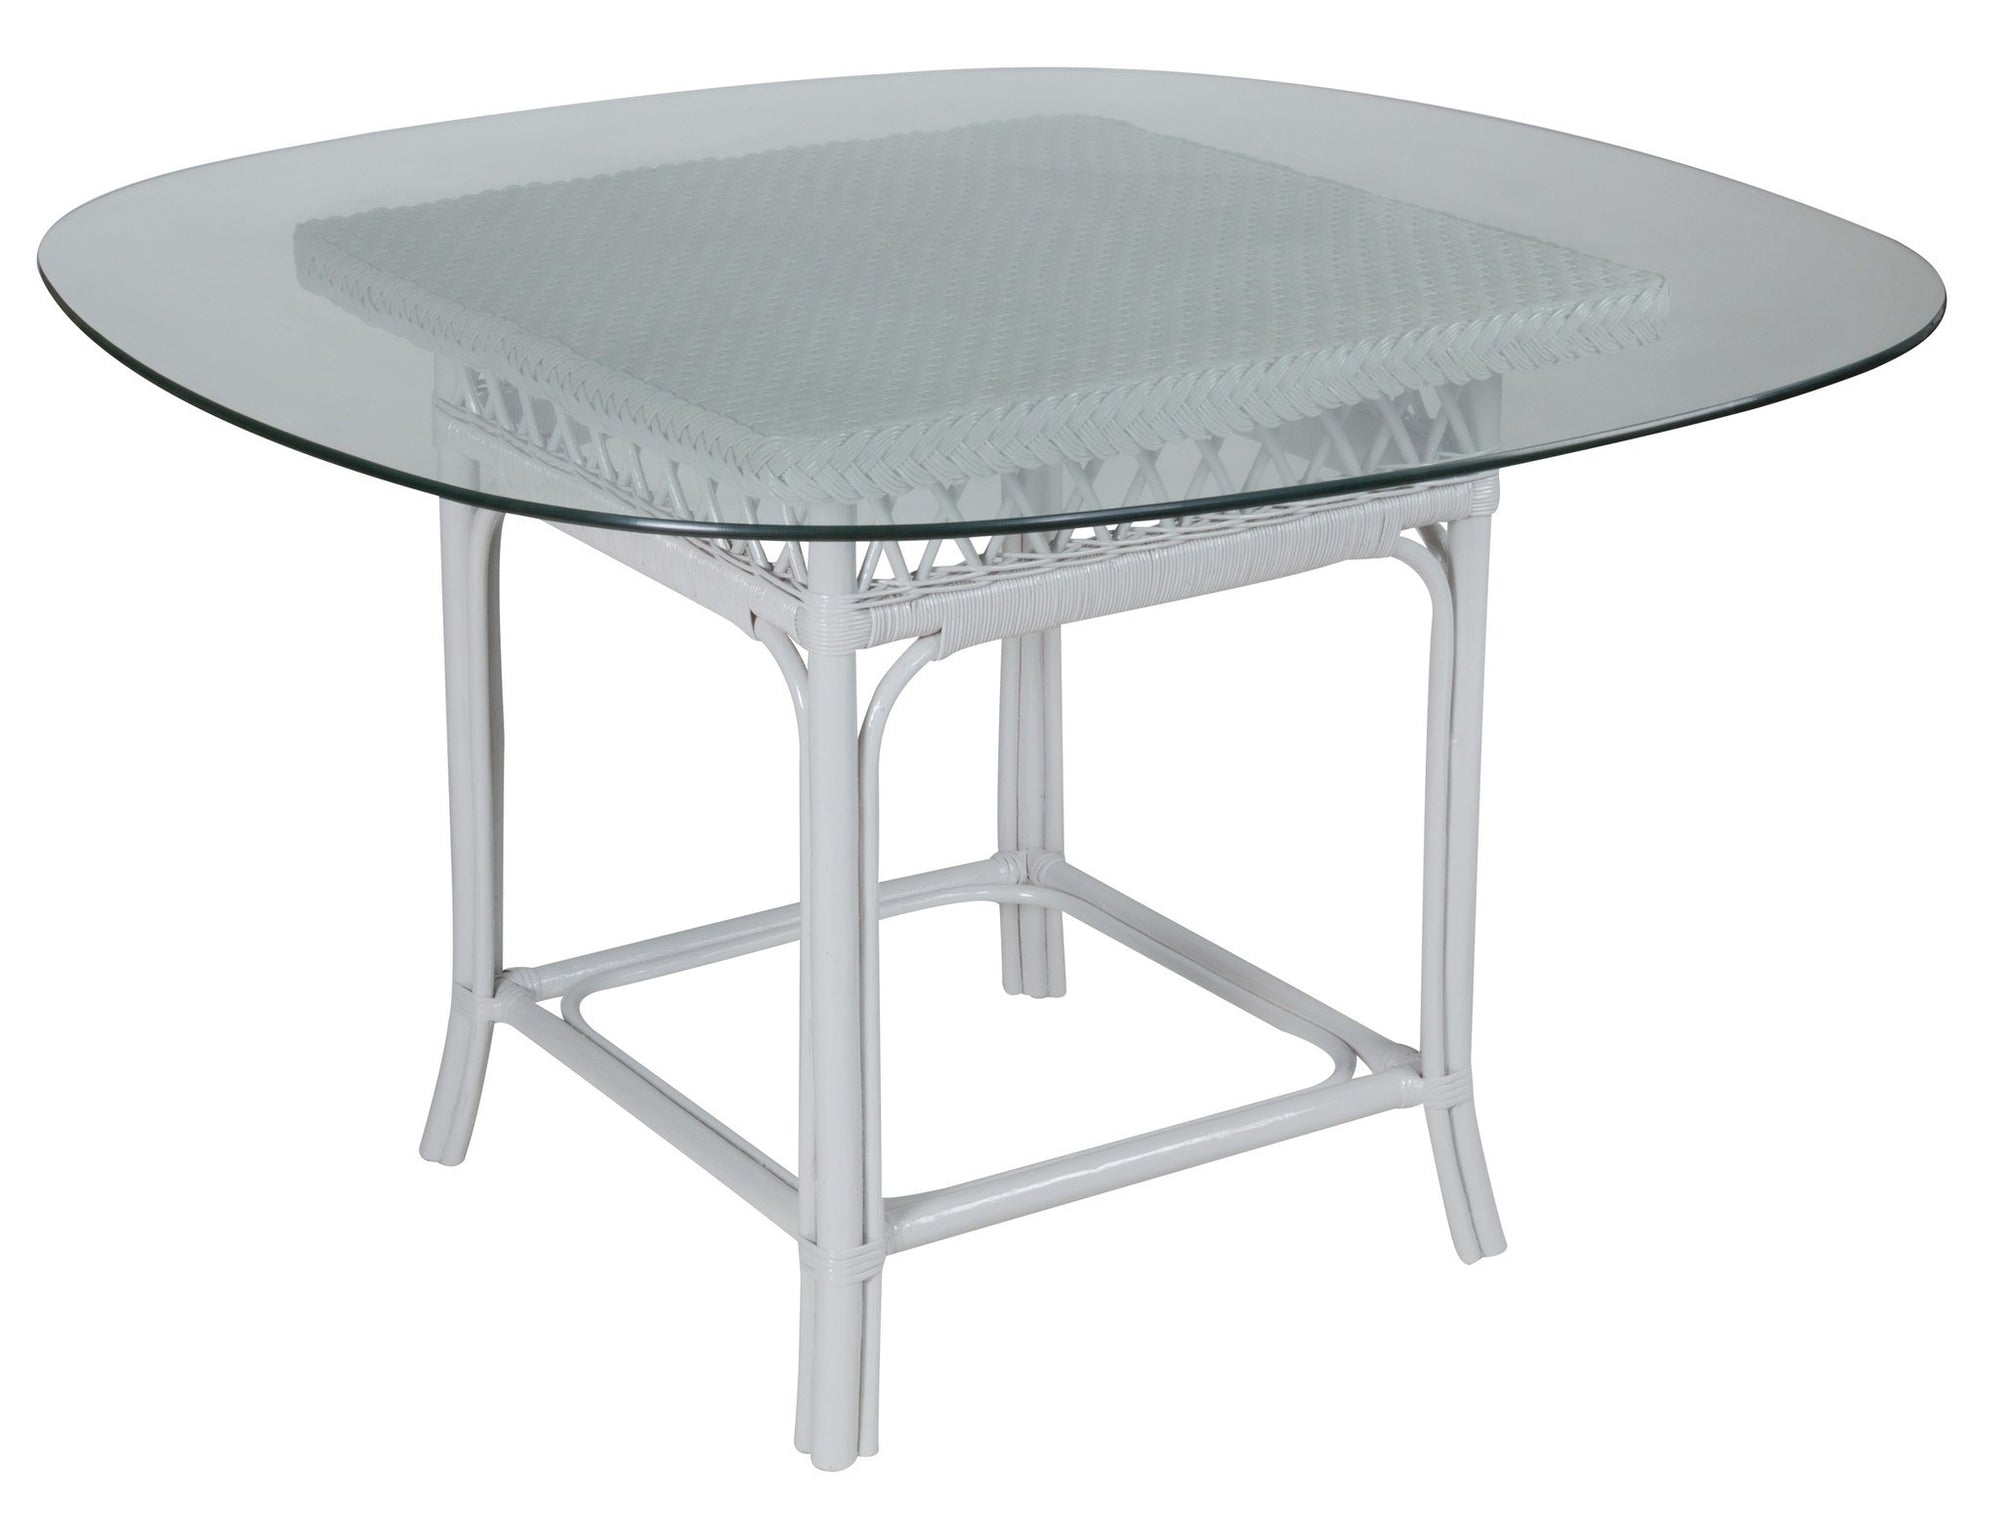 Designer Wicker & Rattan By Tribor Windsor Dining Table Base by Design Wicker from Tribor Table Base - Rattan Imports